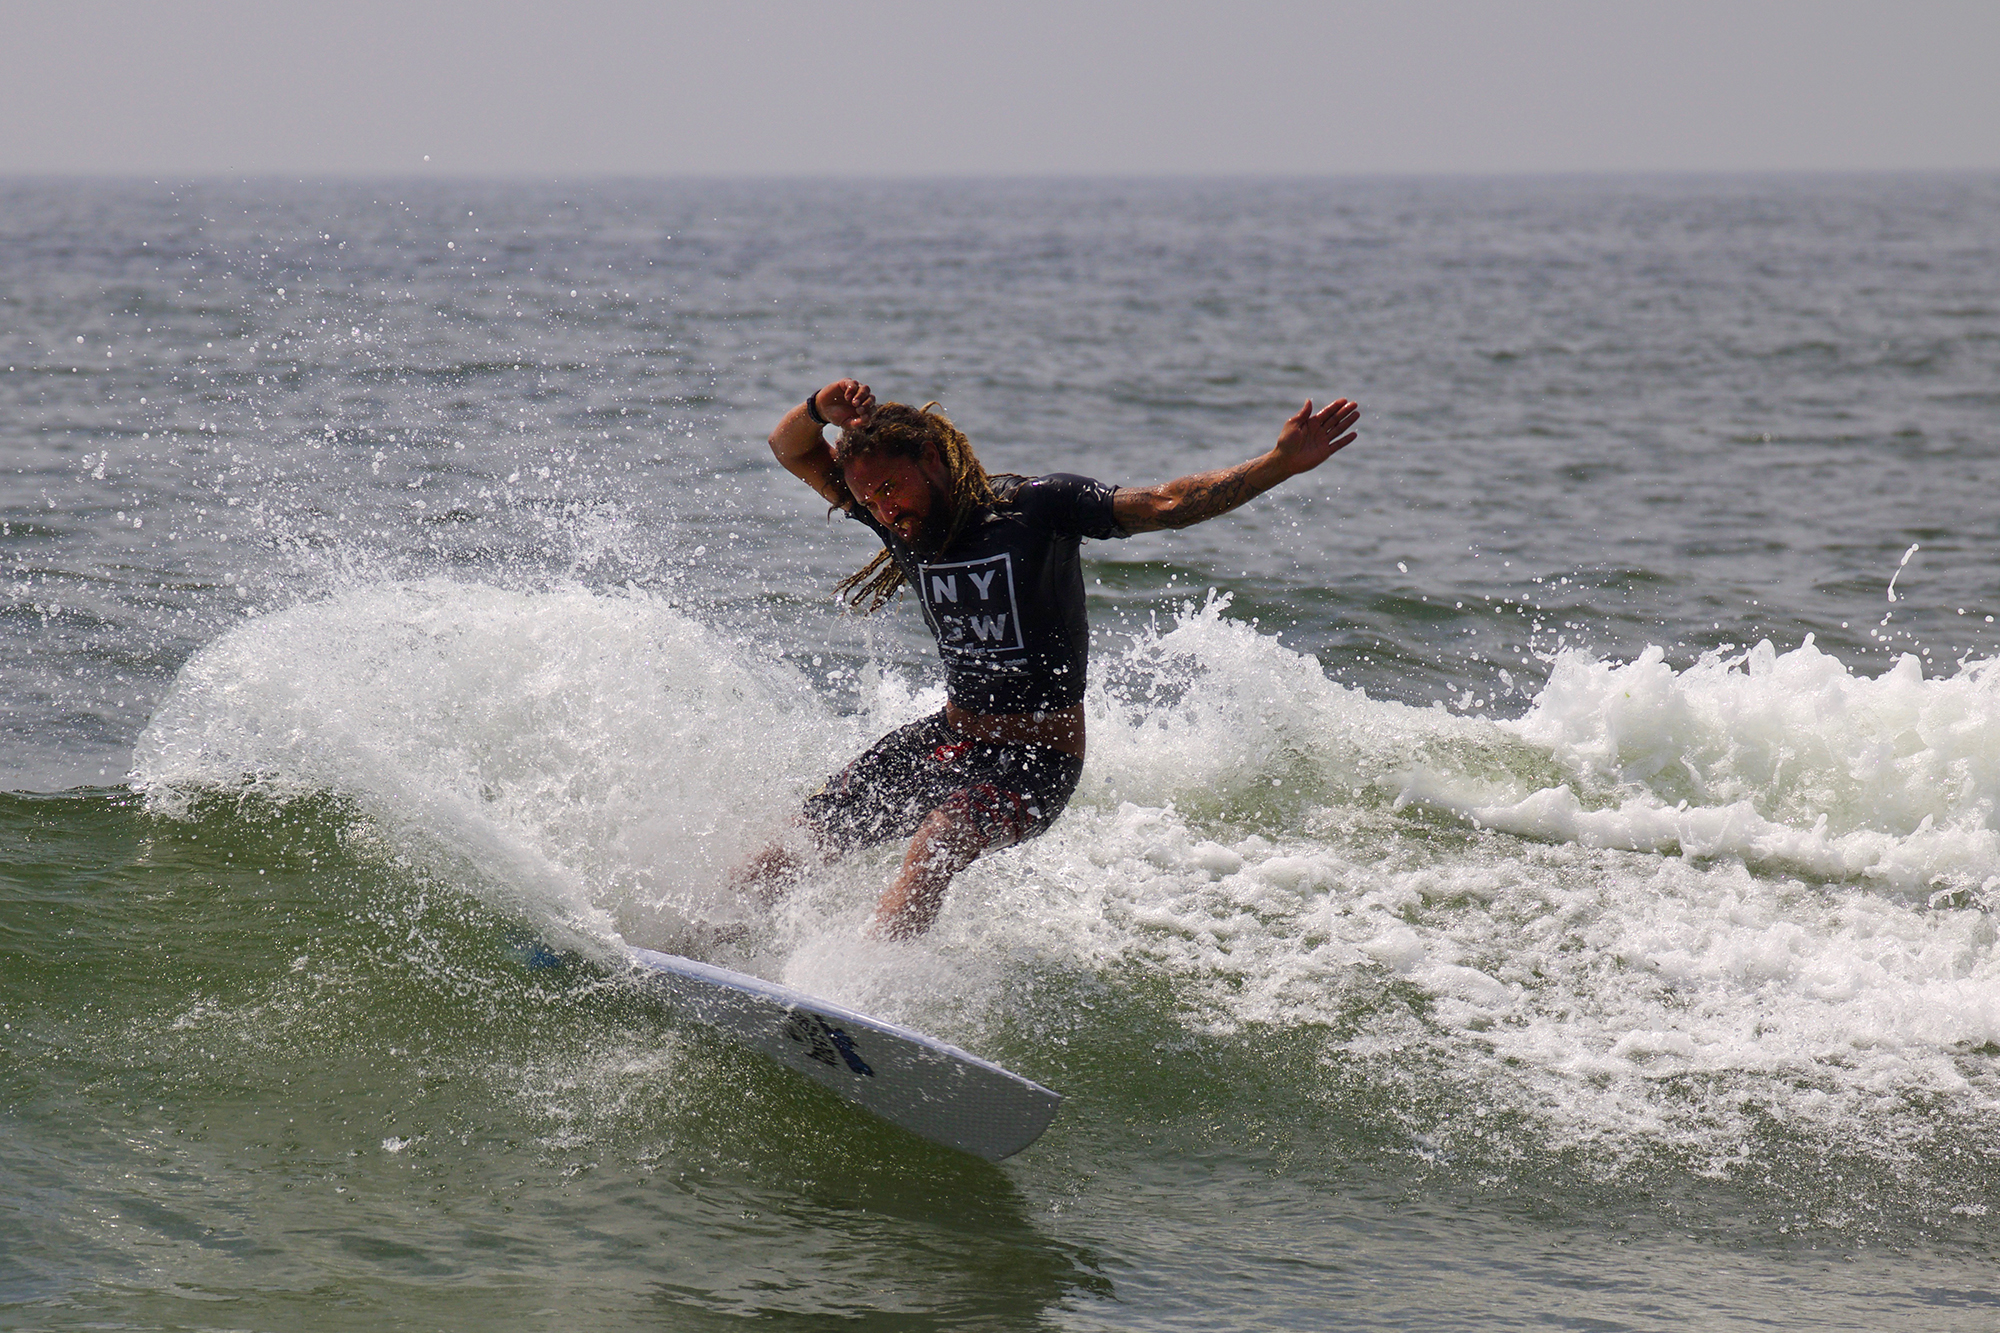 7-15-17 Long Beach Surfer 2.jpg